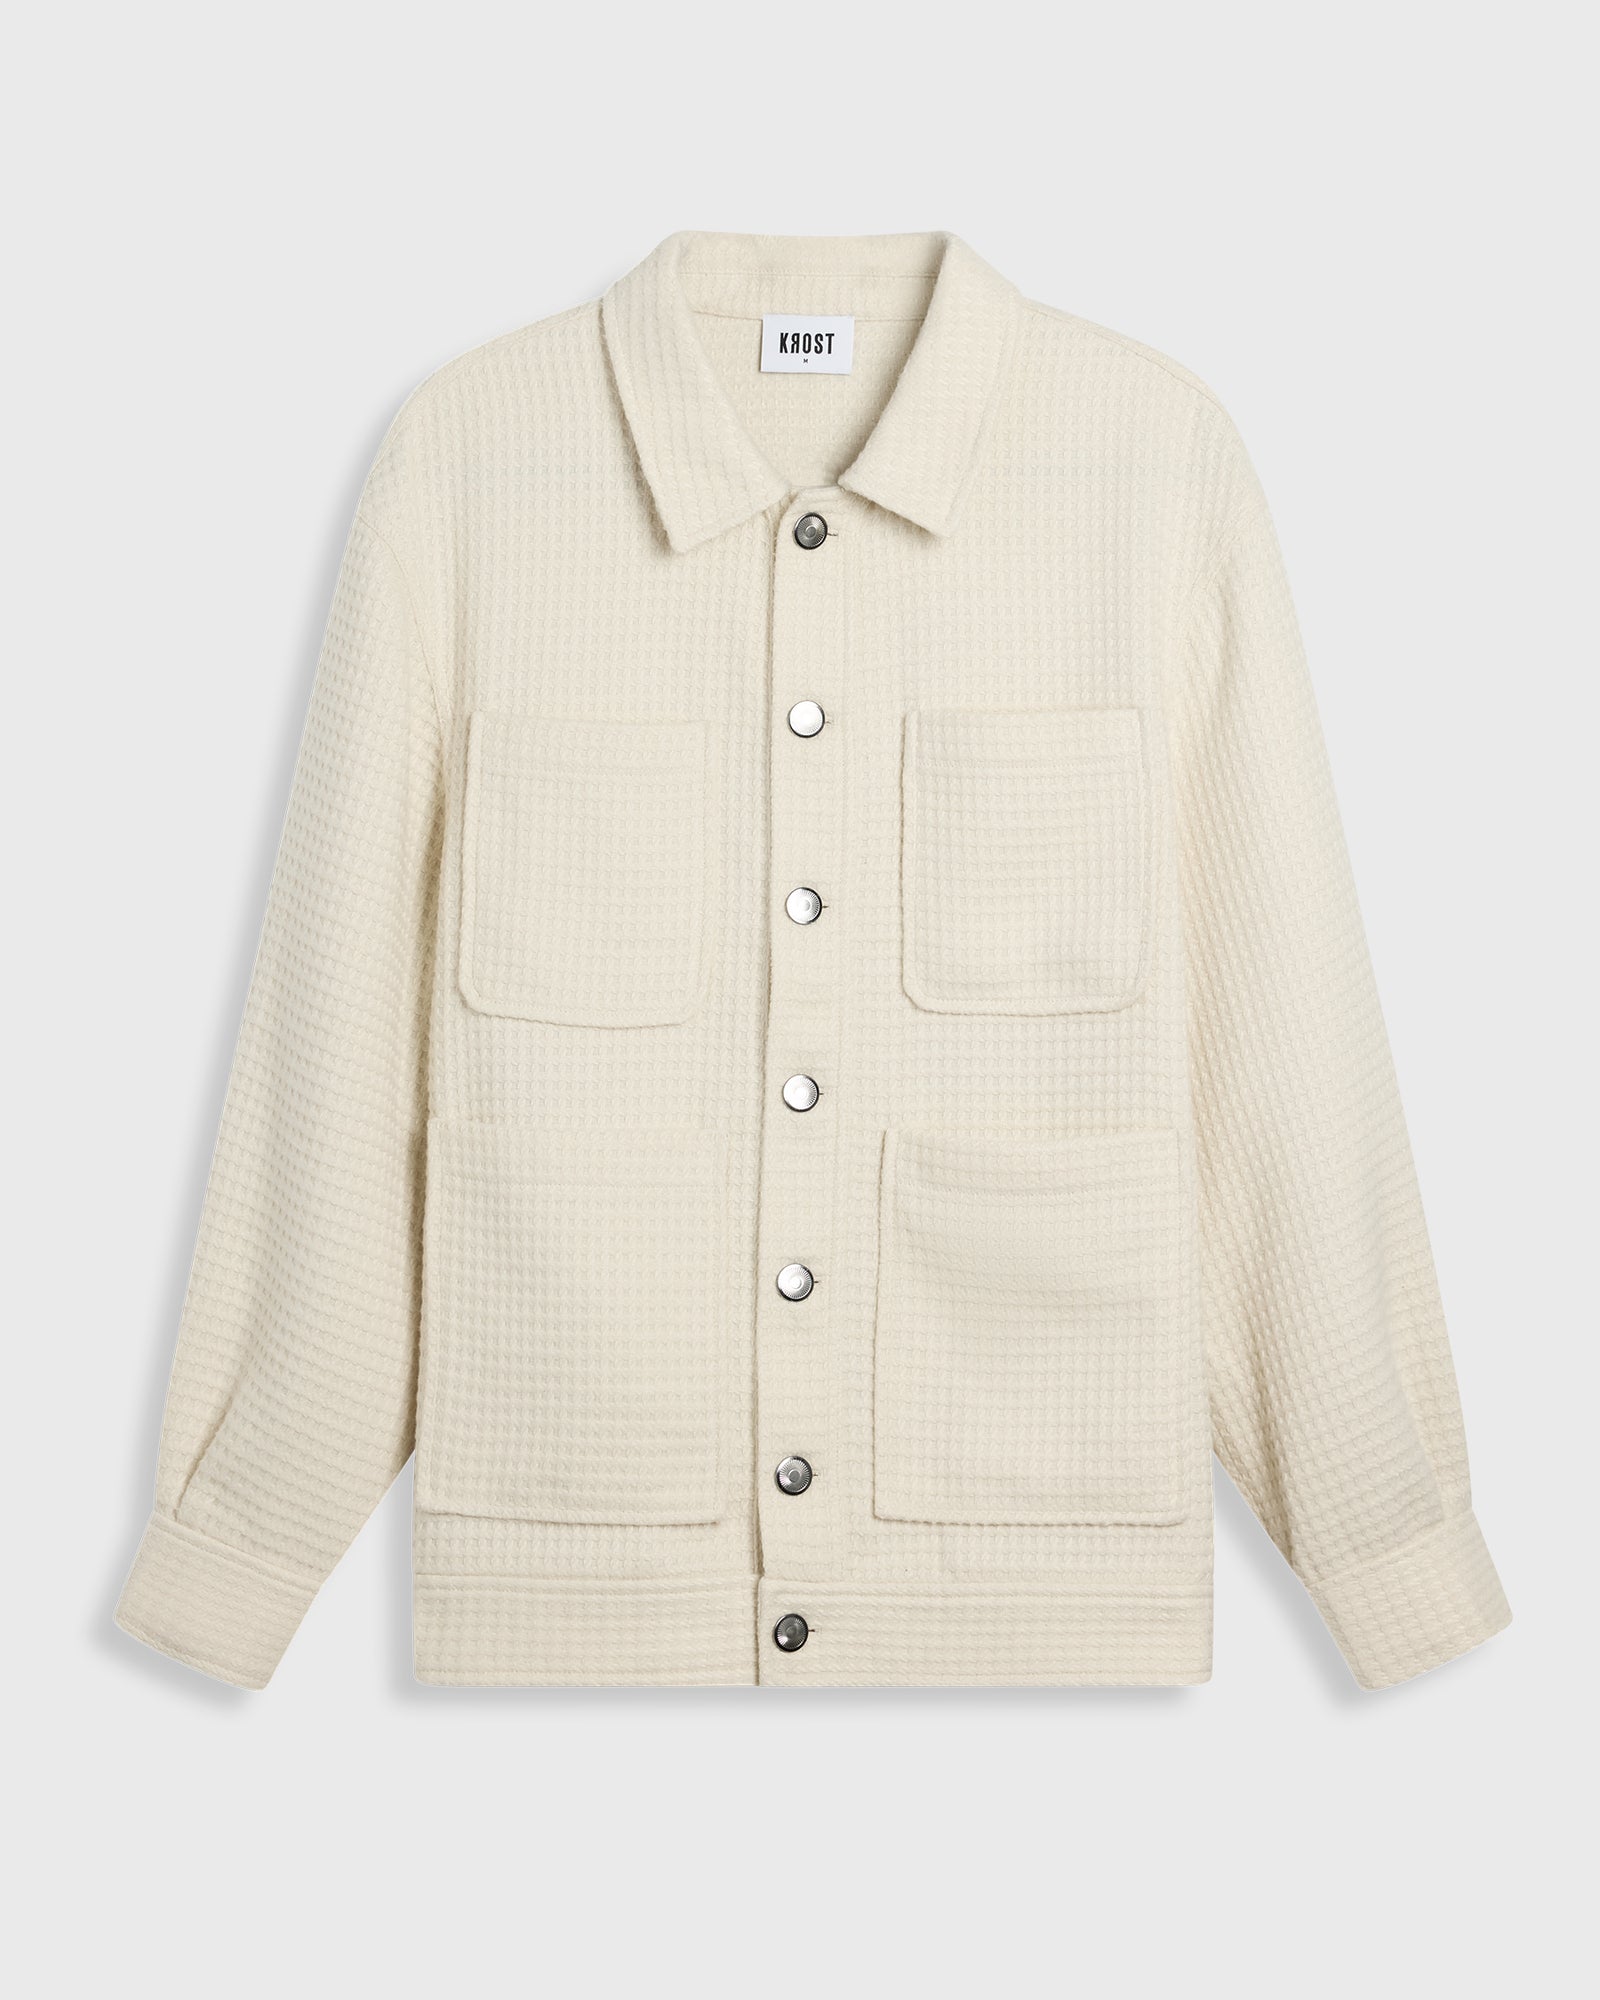 Cream Work Jacket Atlantic - unisex for men & women designer fashion jackets by Krost